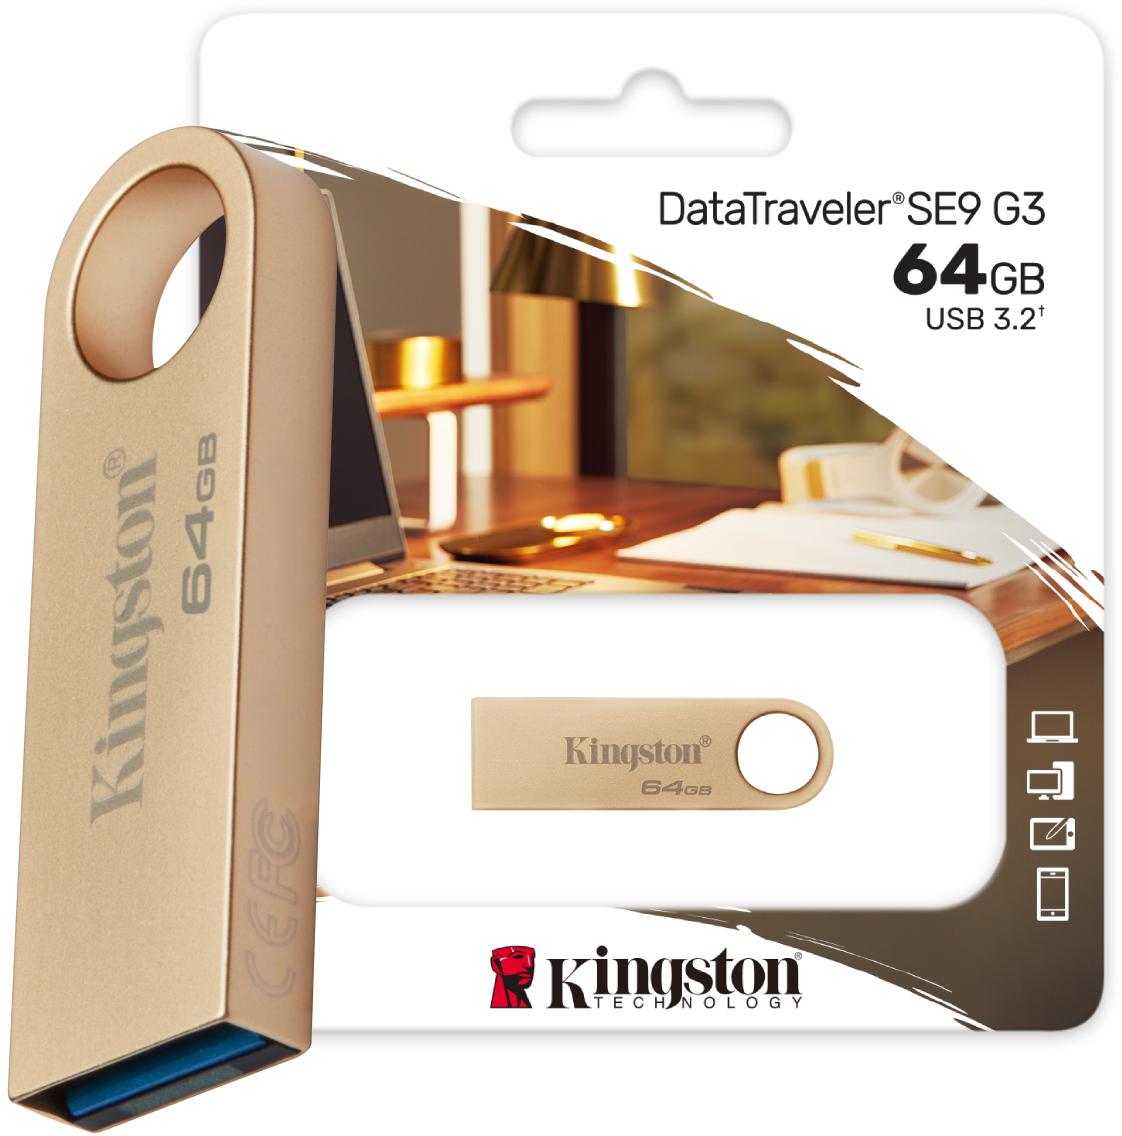 Pamięć flash USB Data Traveler SE9 G3 pendrive Kingston 64GB - najważniejsze cechy: